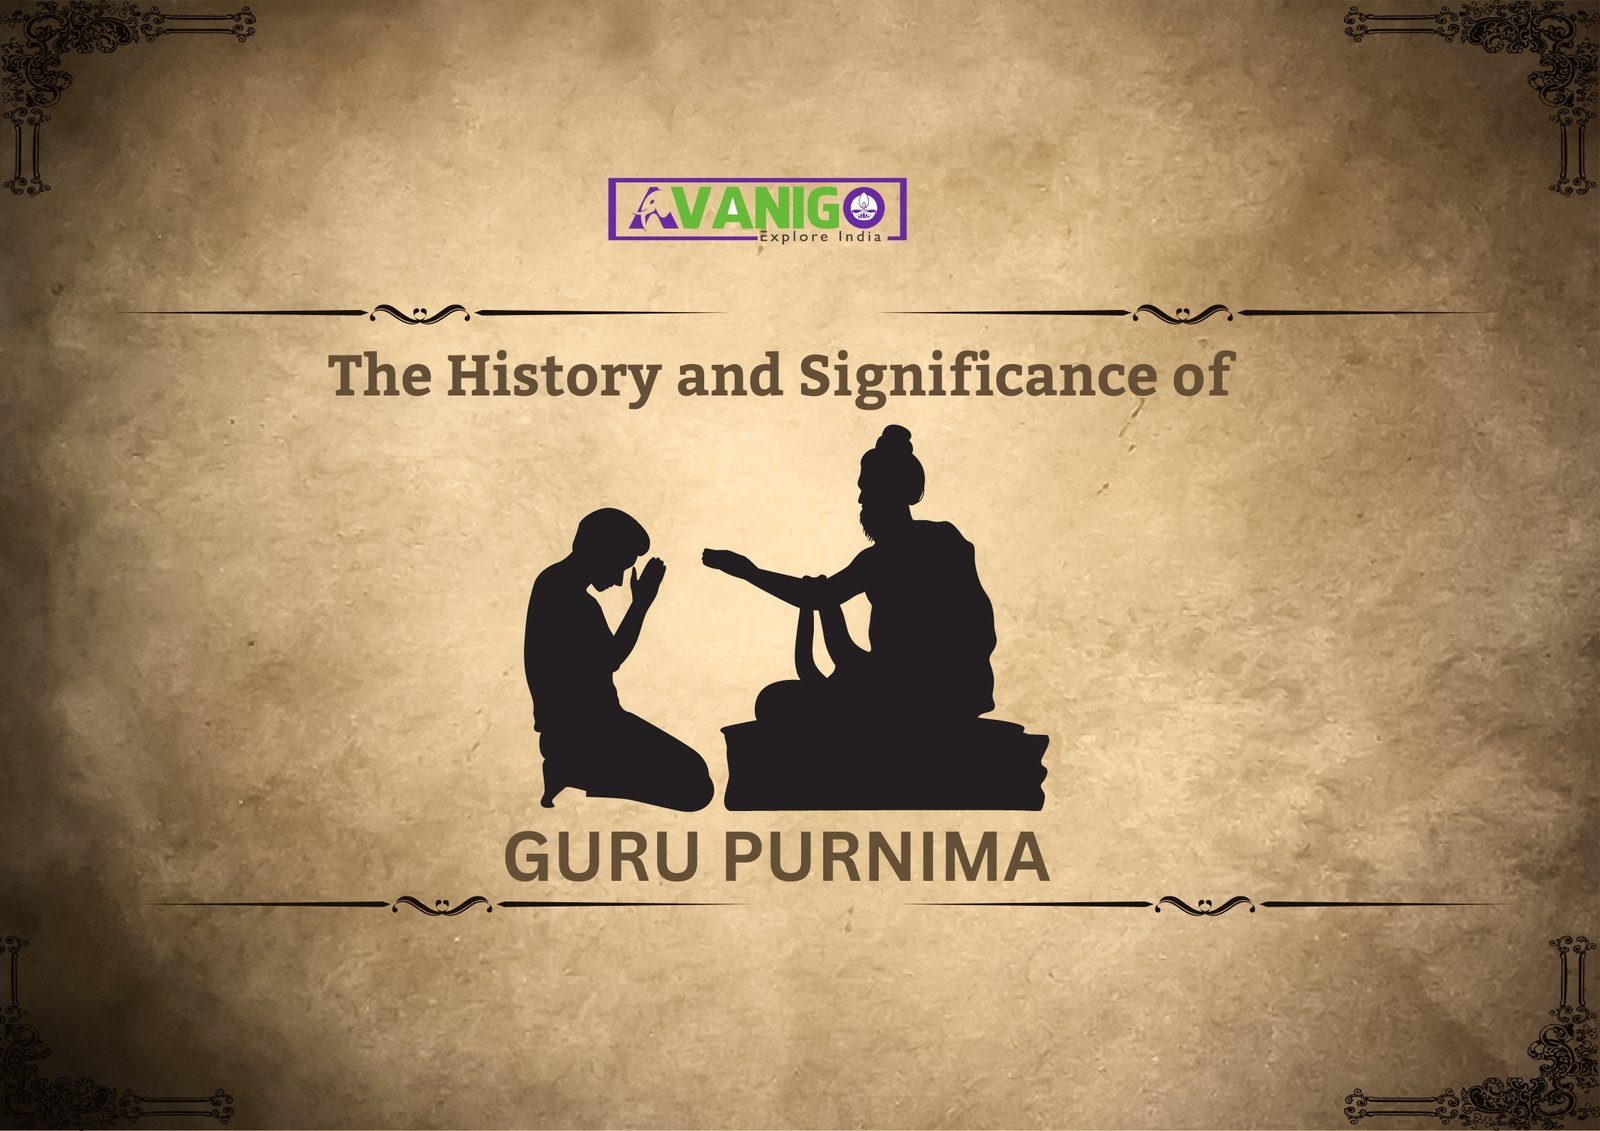 Image showing Guru Purnima